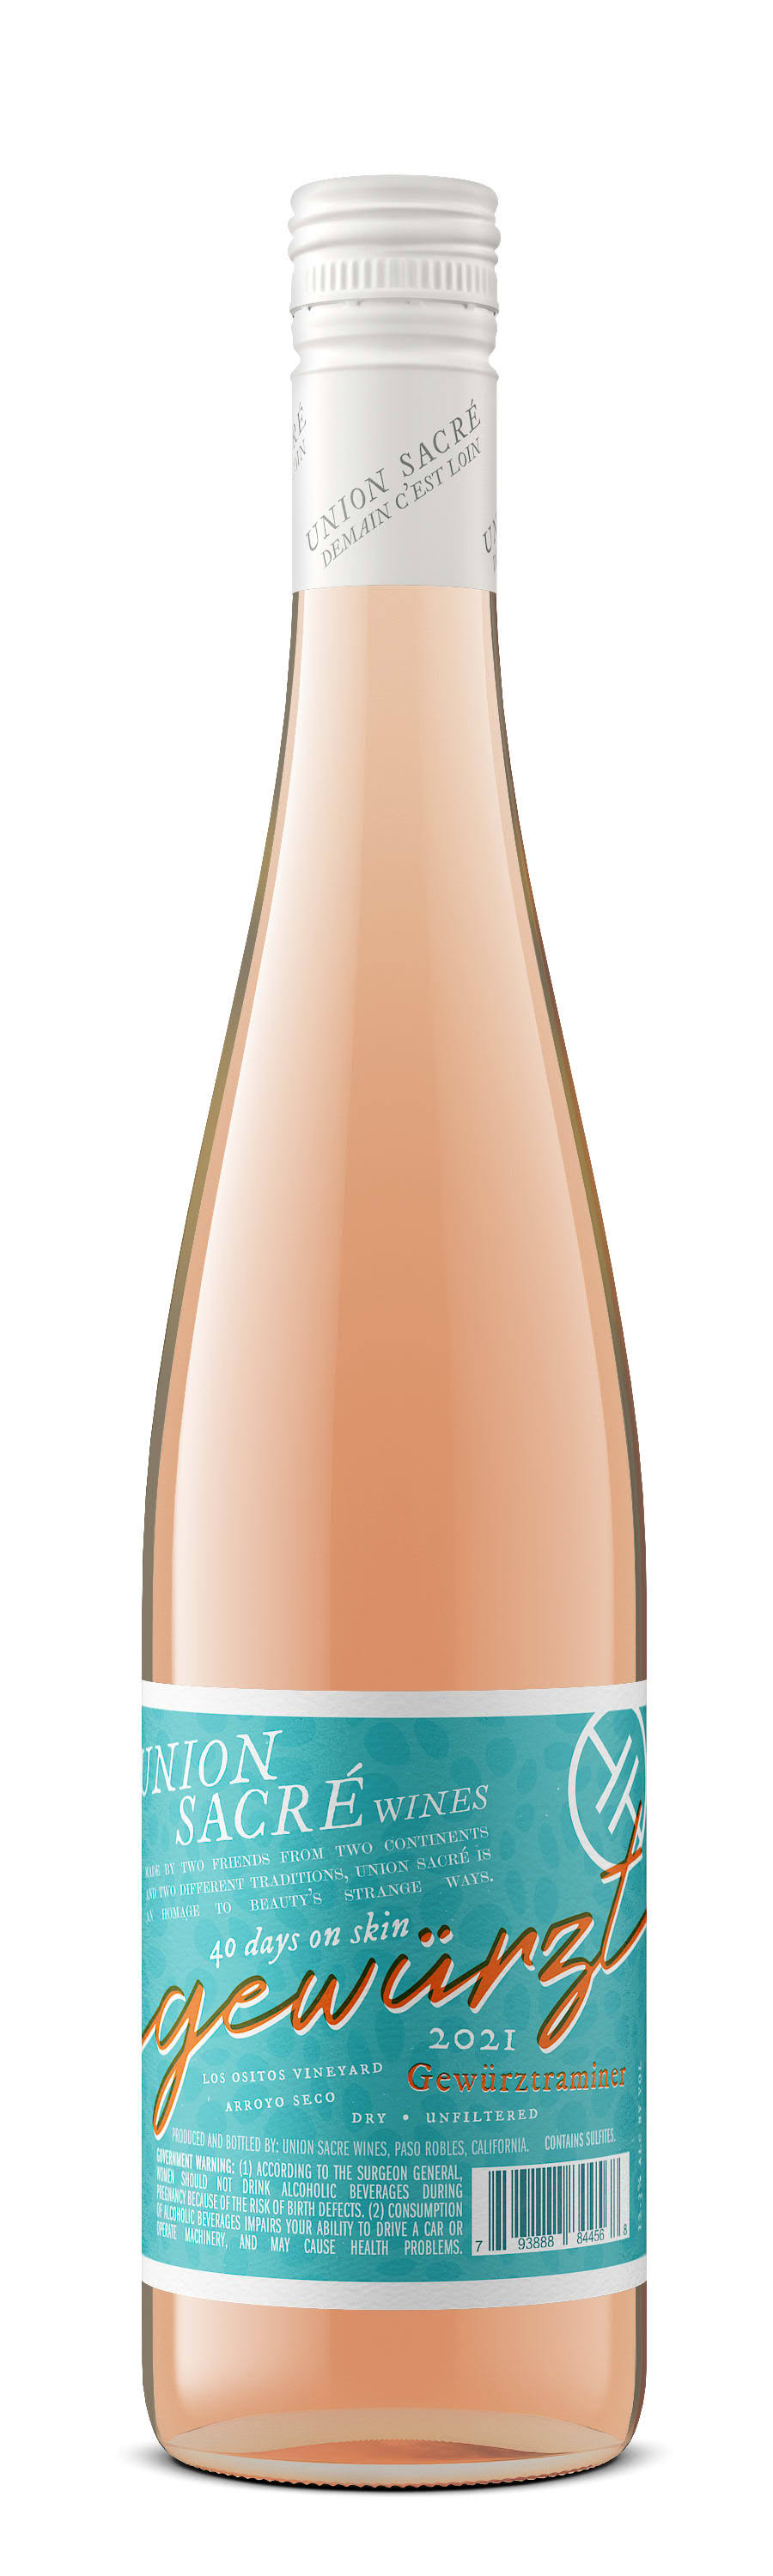 Union Sacre - Gewurztraminer Orange Wine 2021